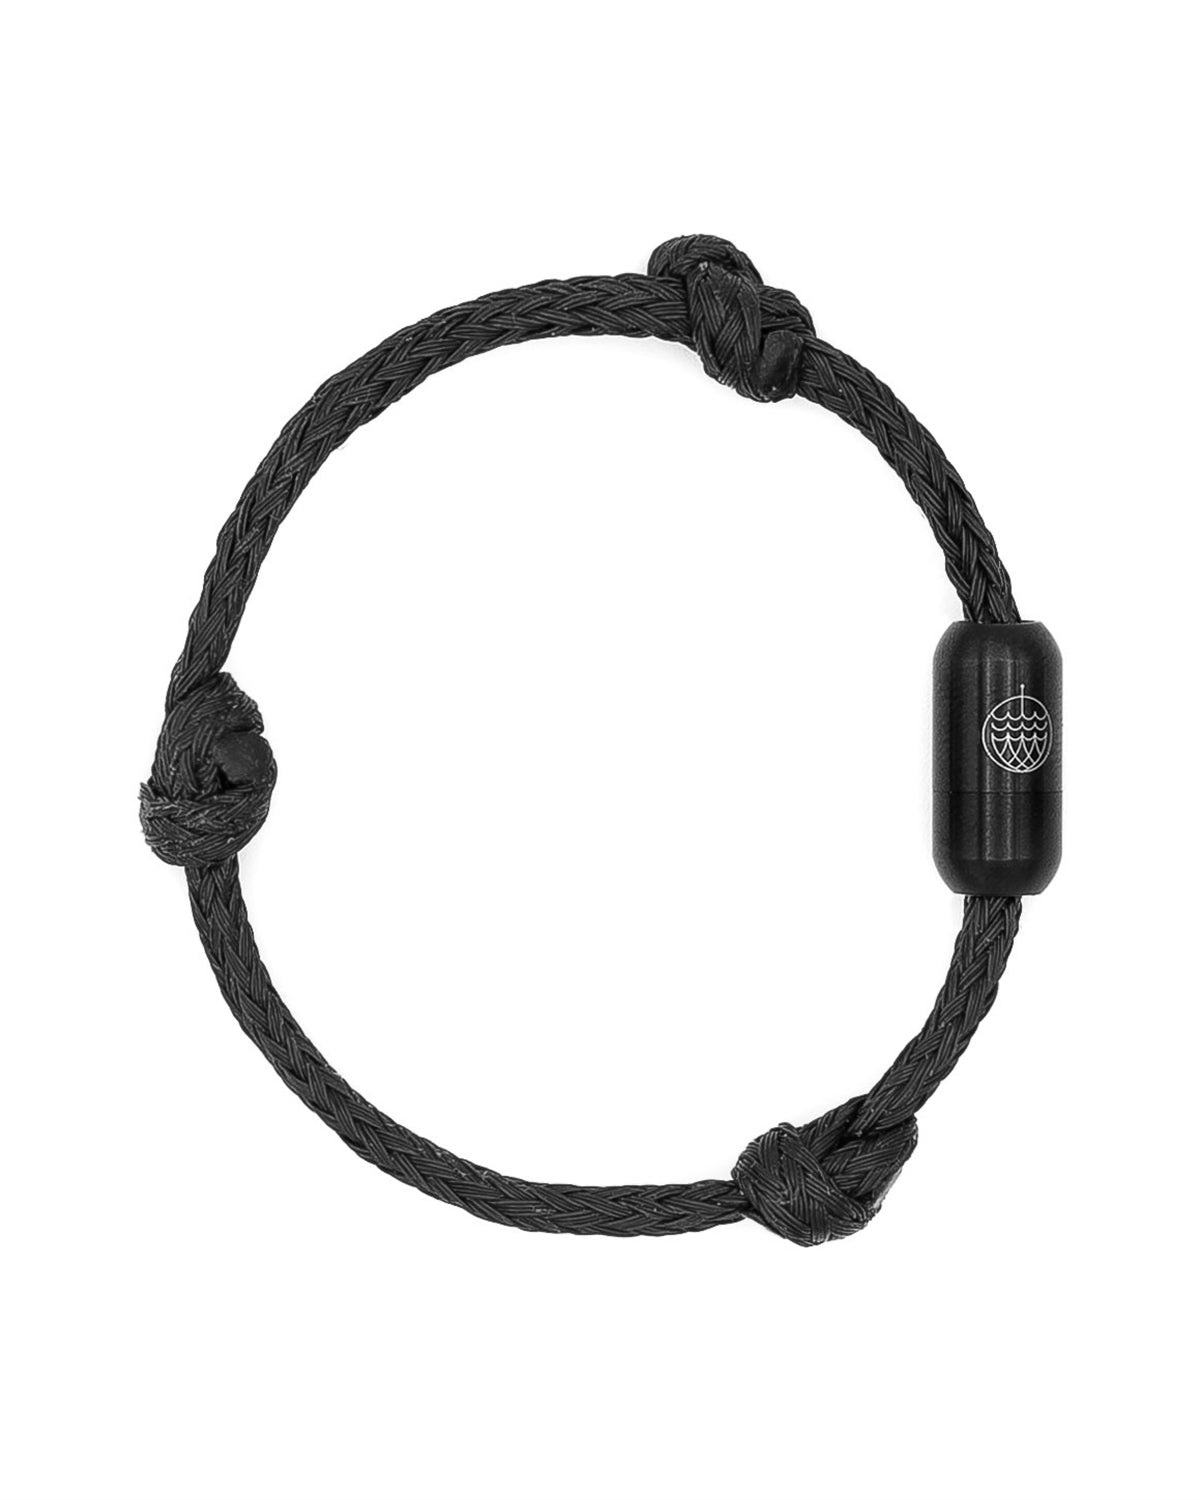 Bracelet in color black with a black clasp by Bracenet